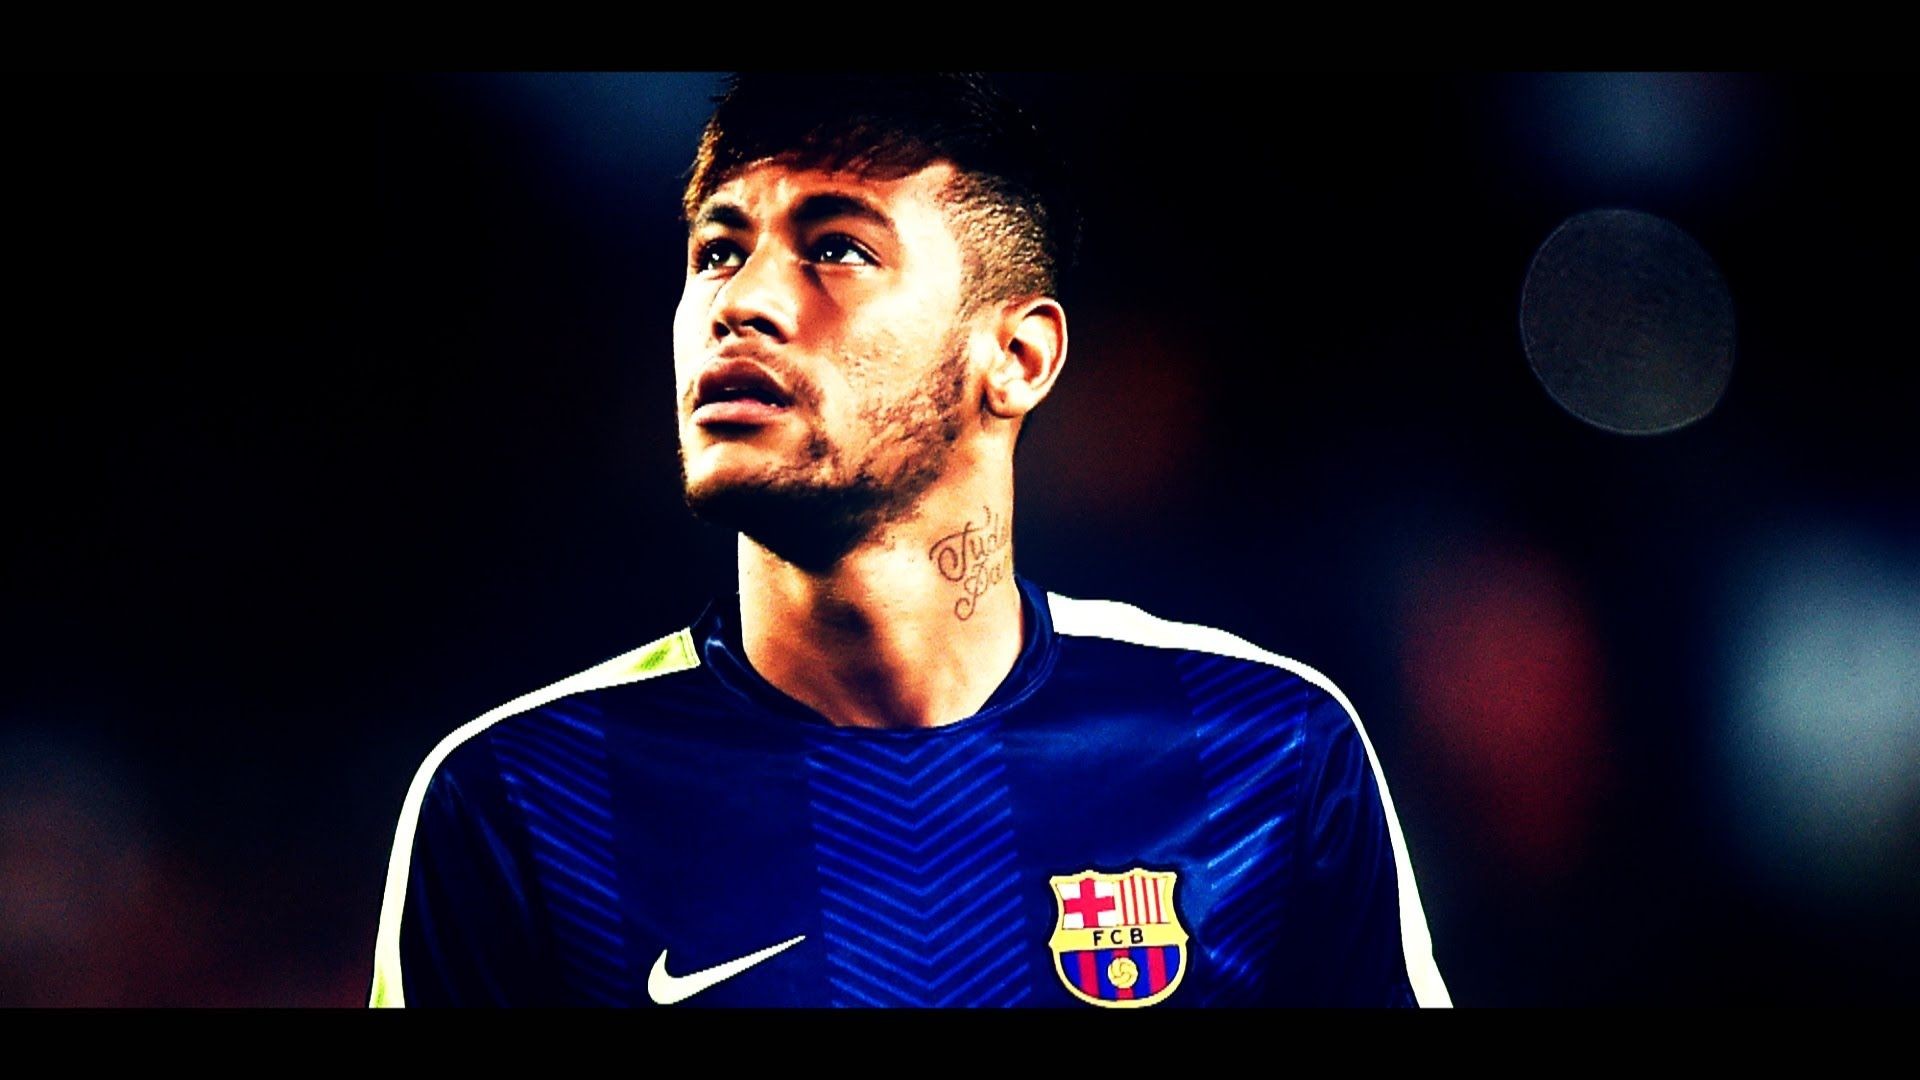 neymar hd wallpaper download,football player,player,forehead,cheek,soccer player